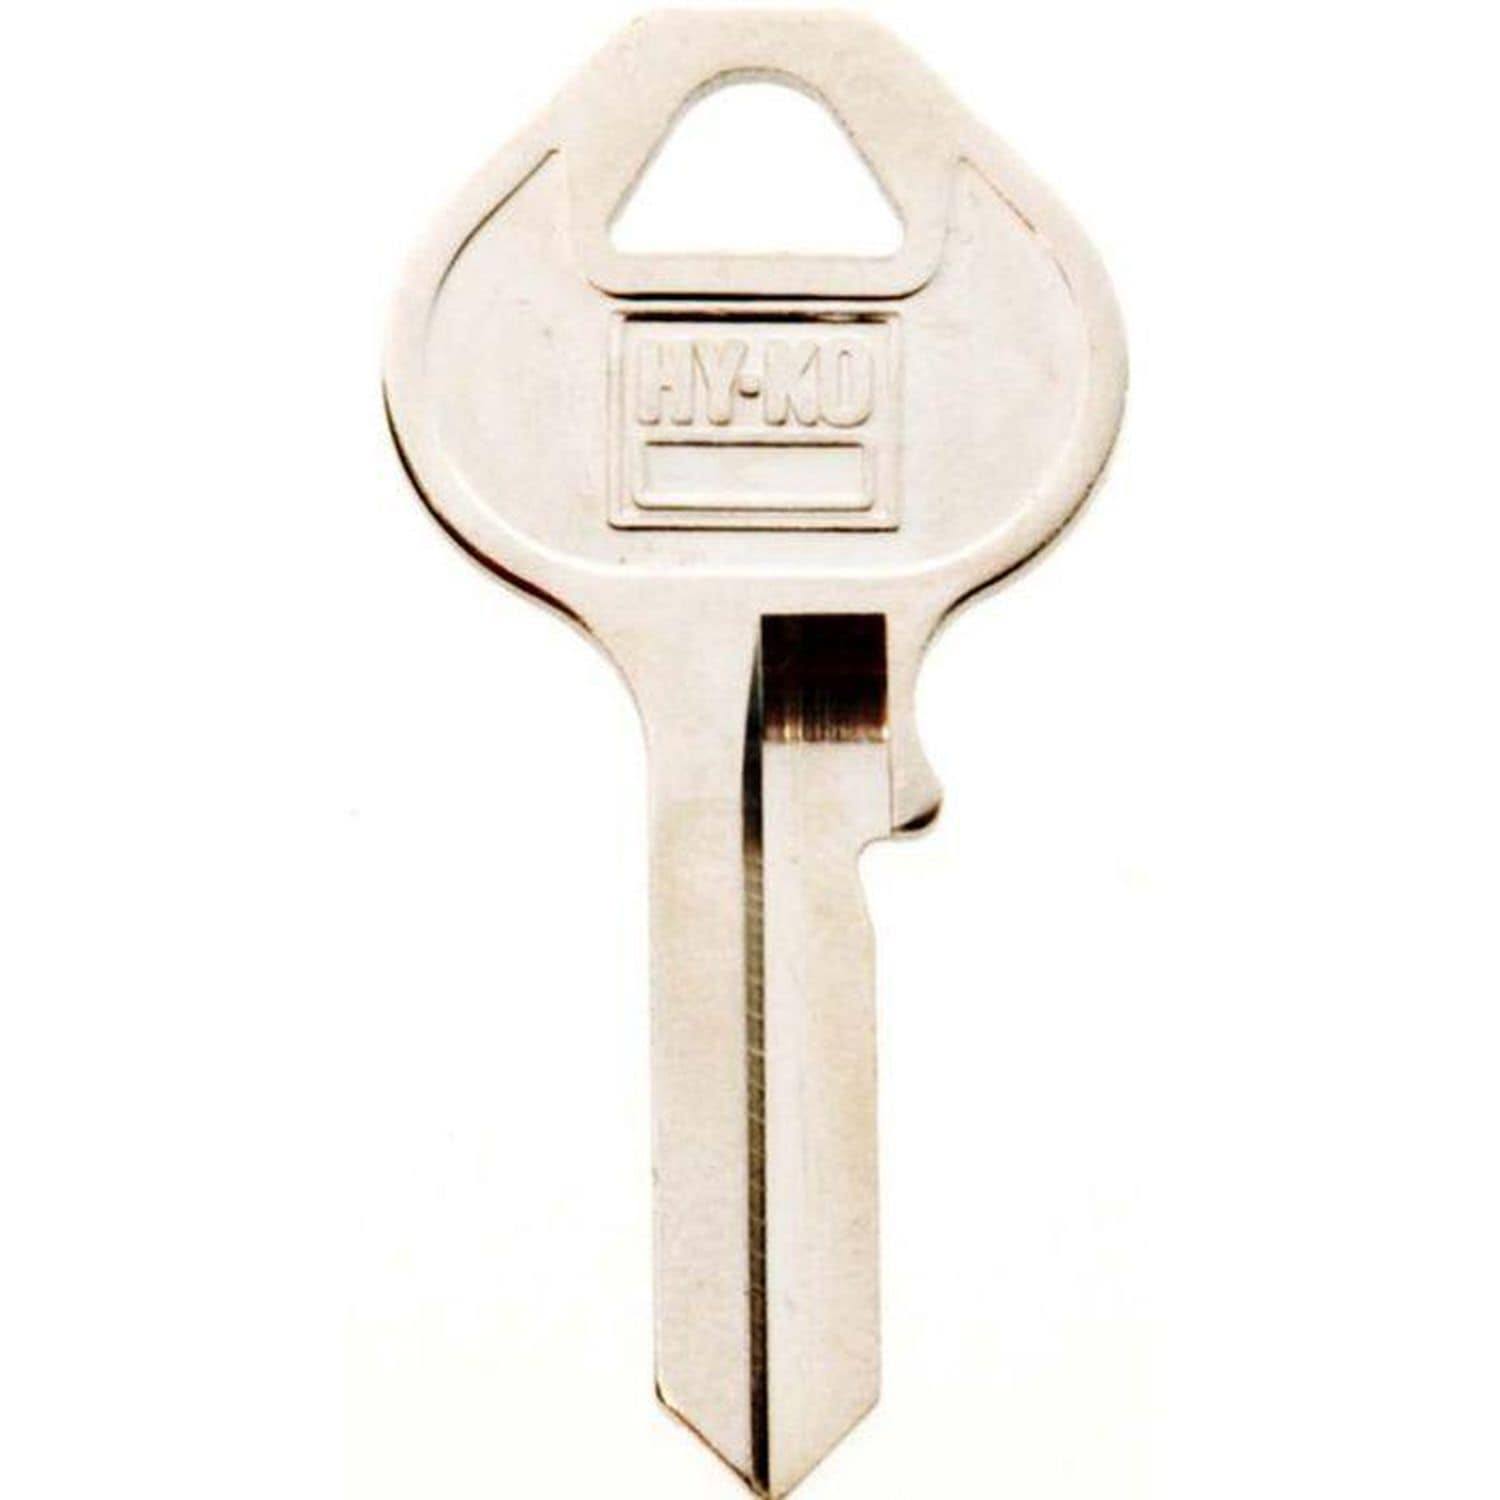 Hy-ko Products Keyblank Master Lock